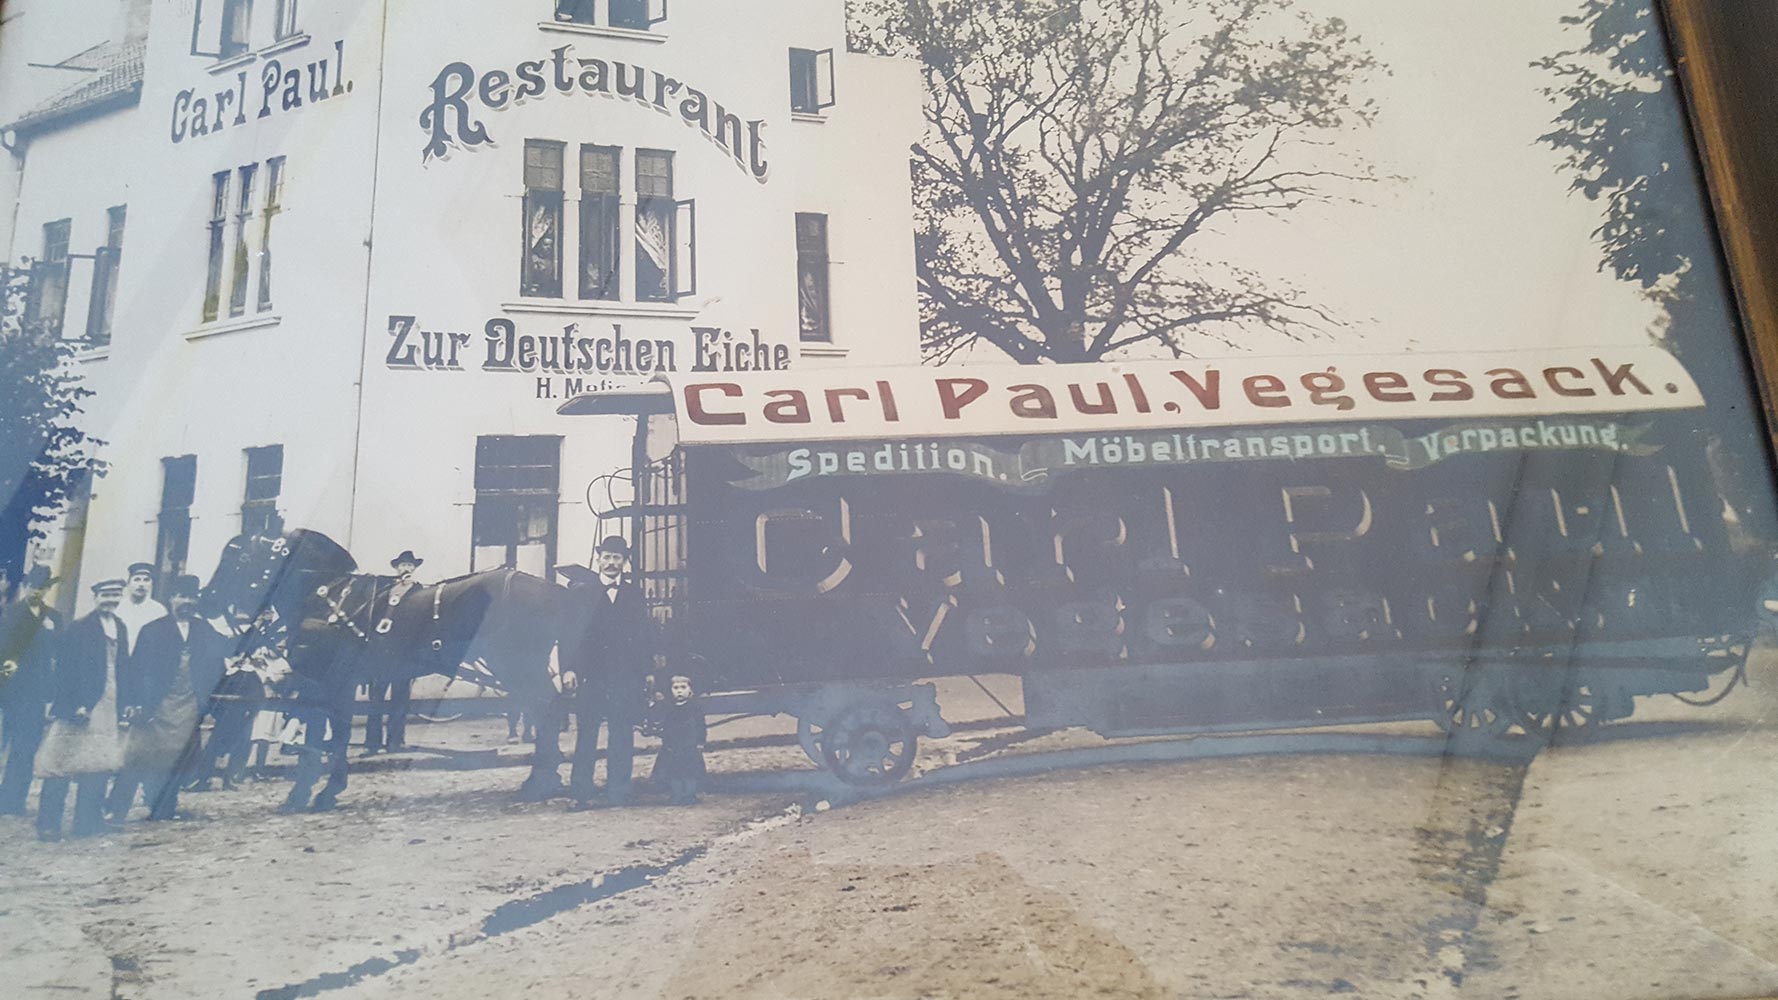 Carl Paul Möbeltransporte historisch